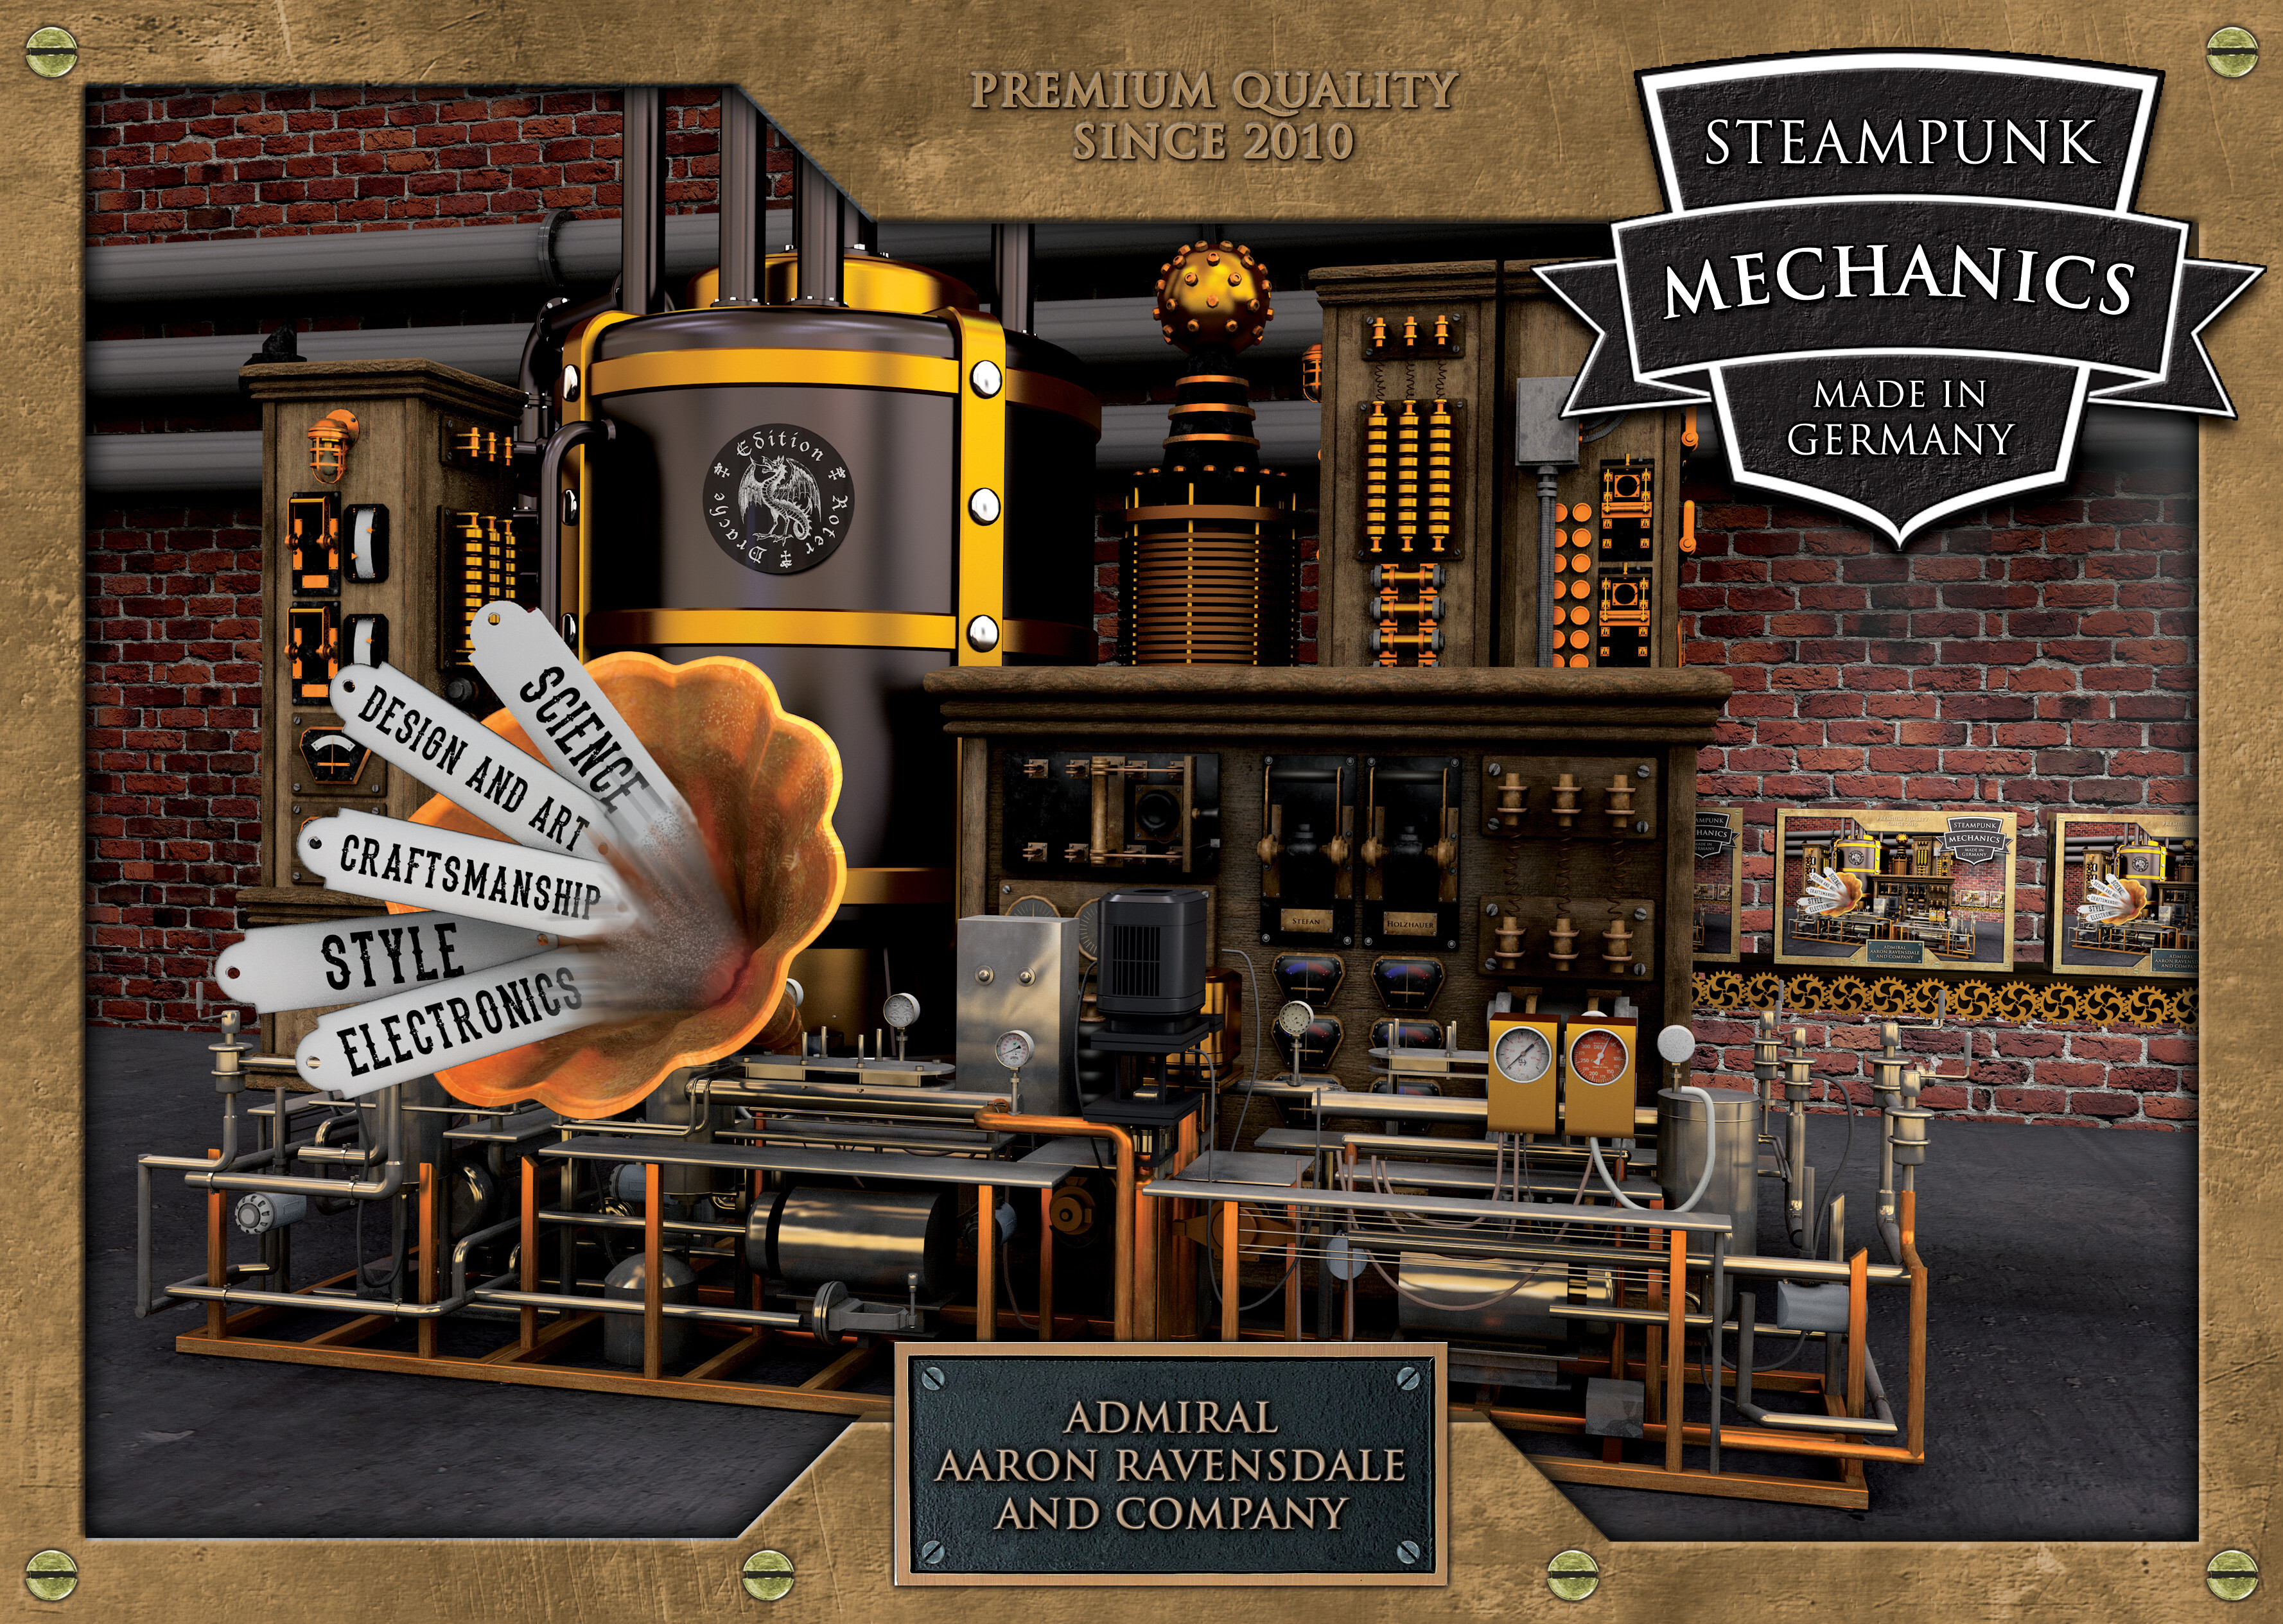 Steampunk-Mechanics